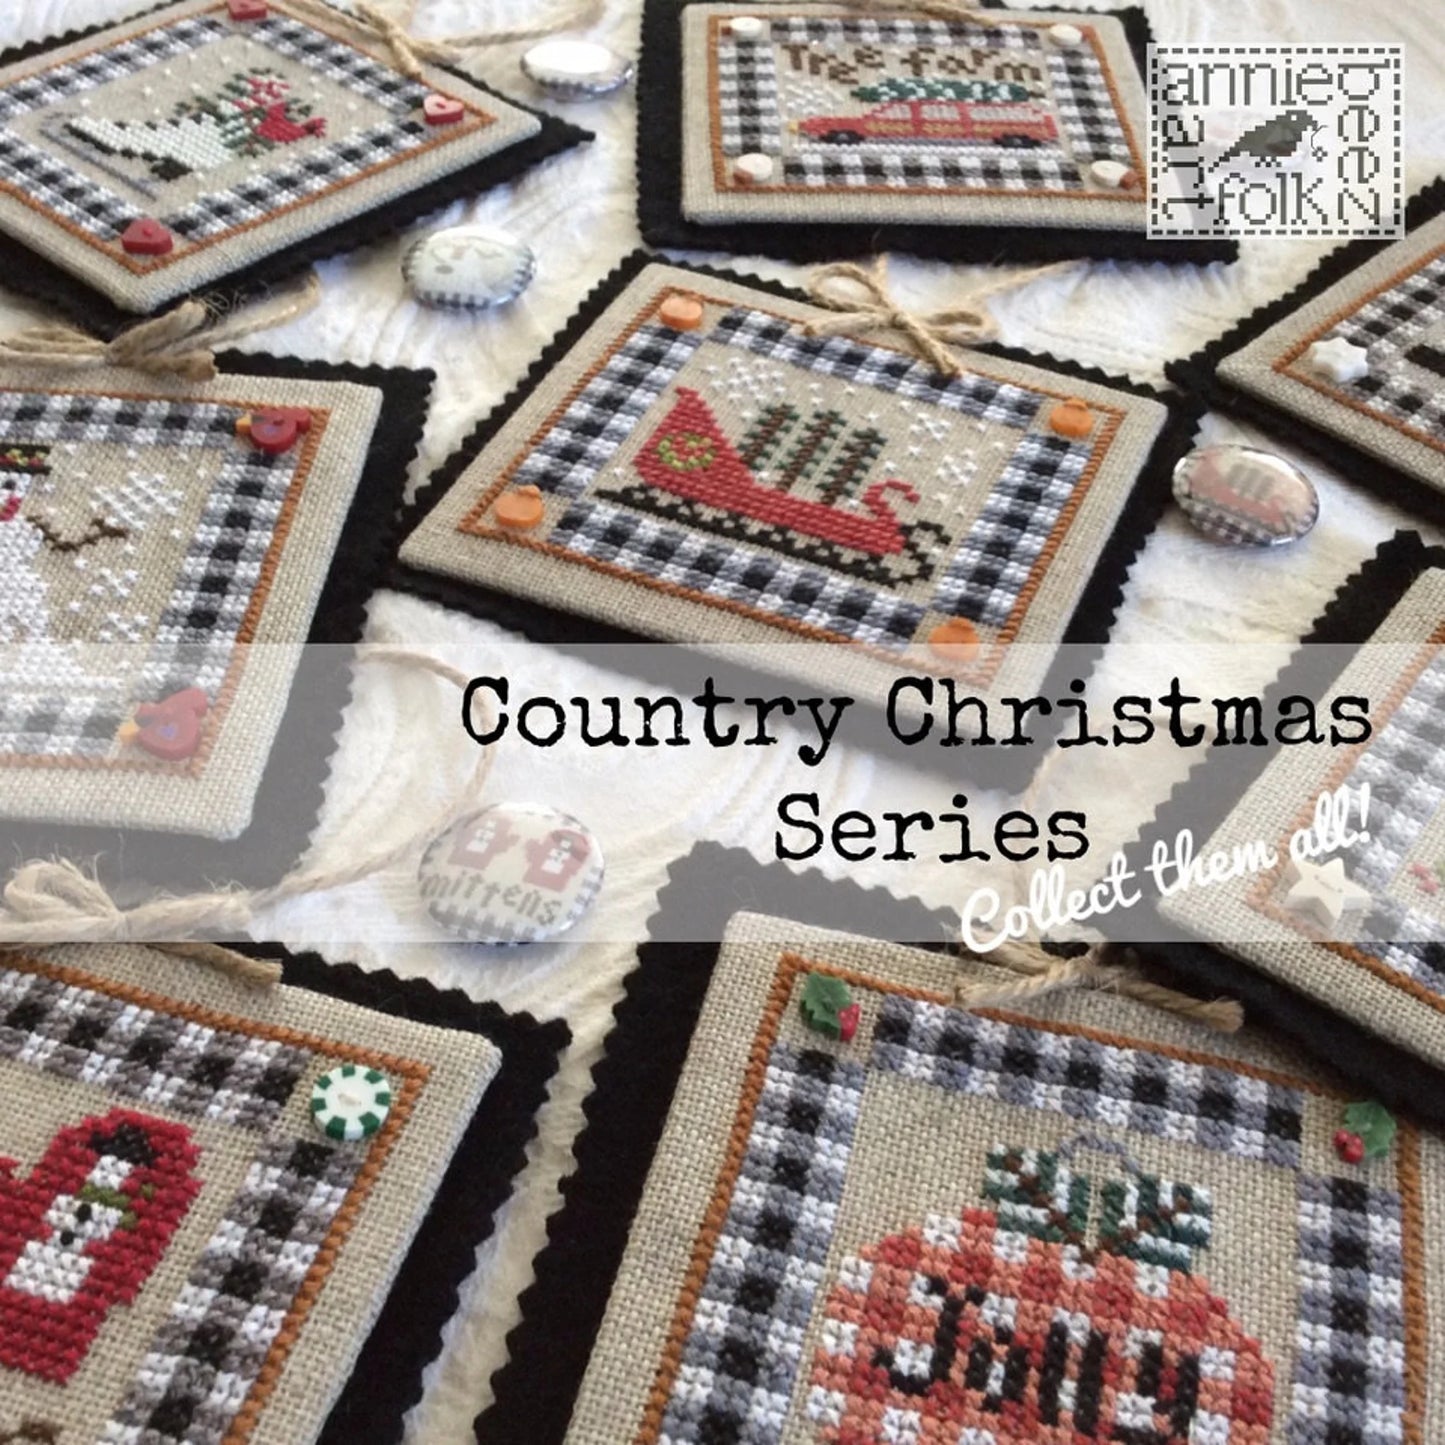 Country Christmas 2 NW-64 cross-stitch pattern by Annie Beez Folk Art